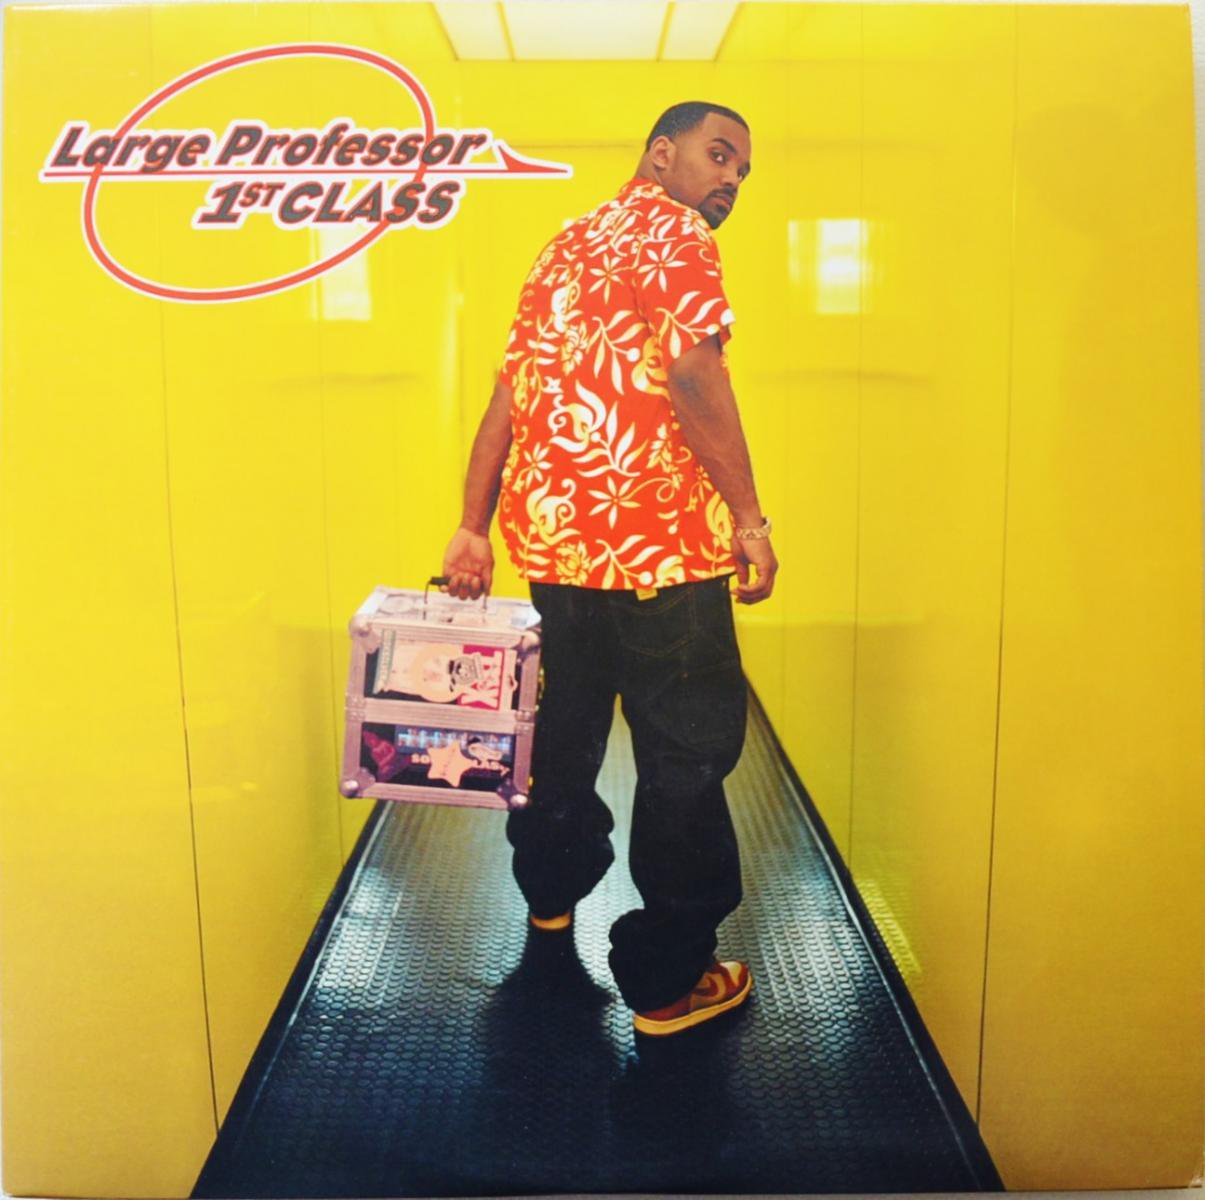 LARGE PROFESSOR / 1ST CLASS (2LP) - HIP TANK RECORDS